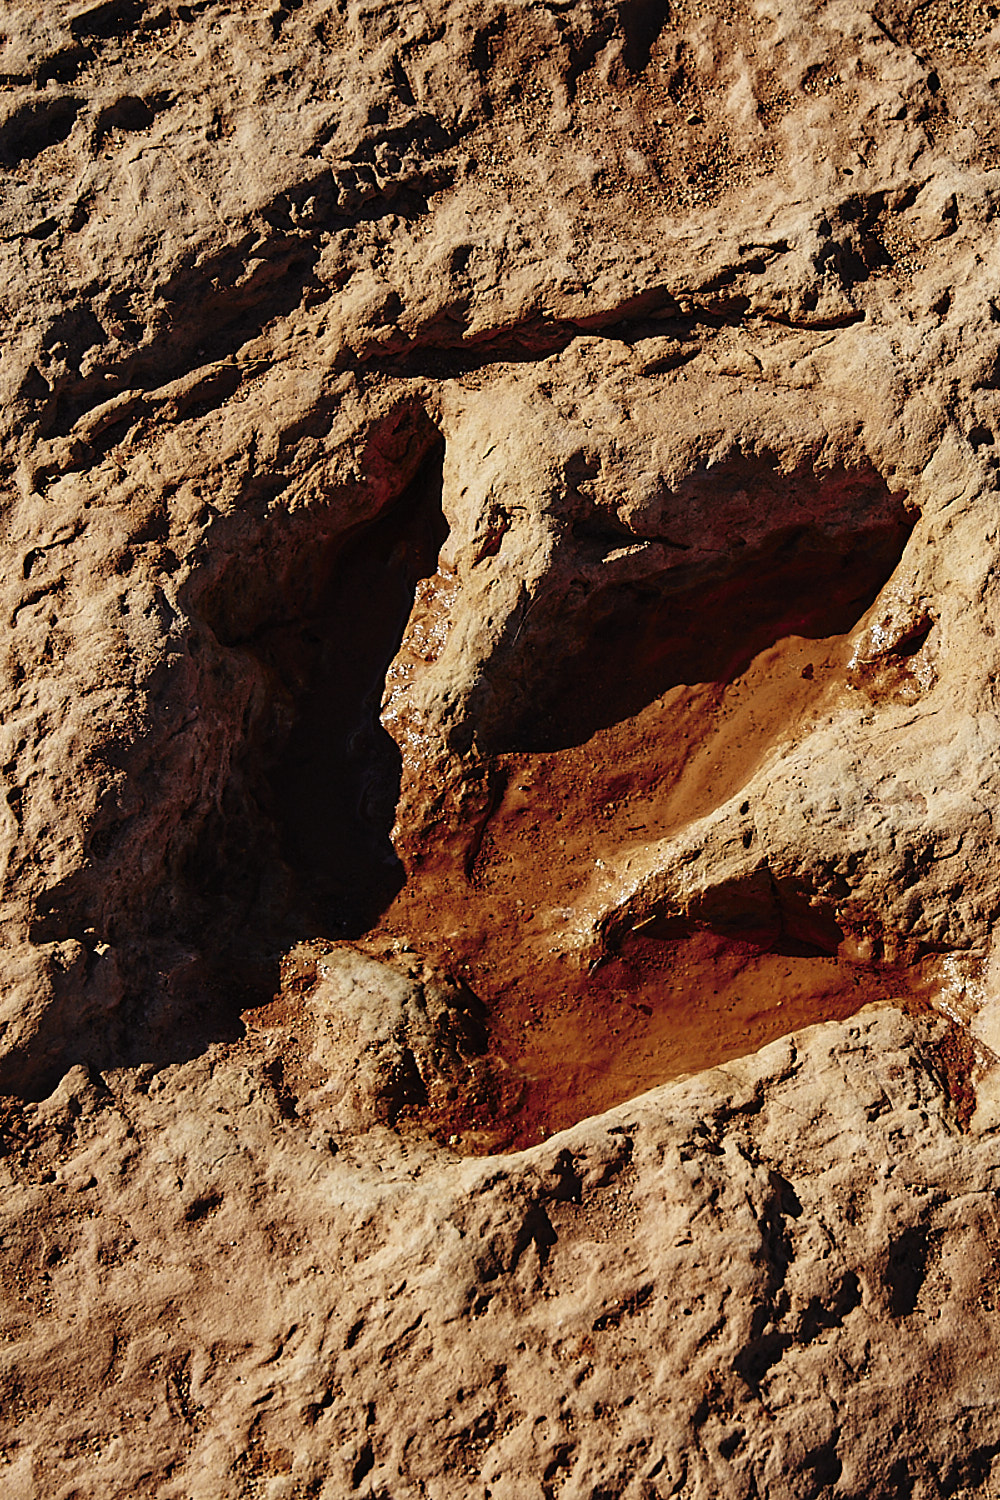 Navajo Moenave Dinosaur Tracks - Heading to Monument Valley